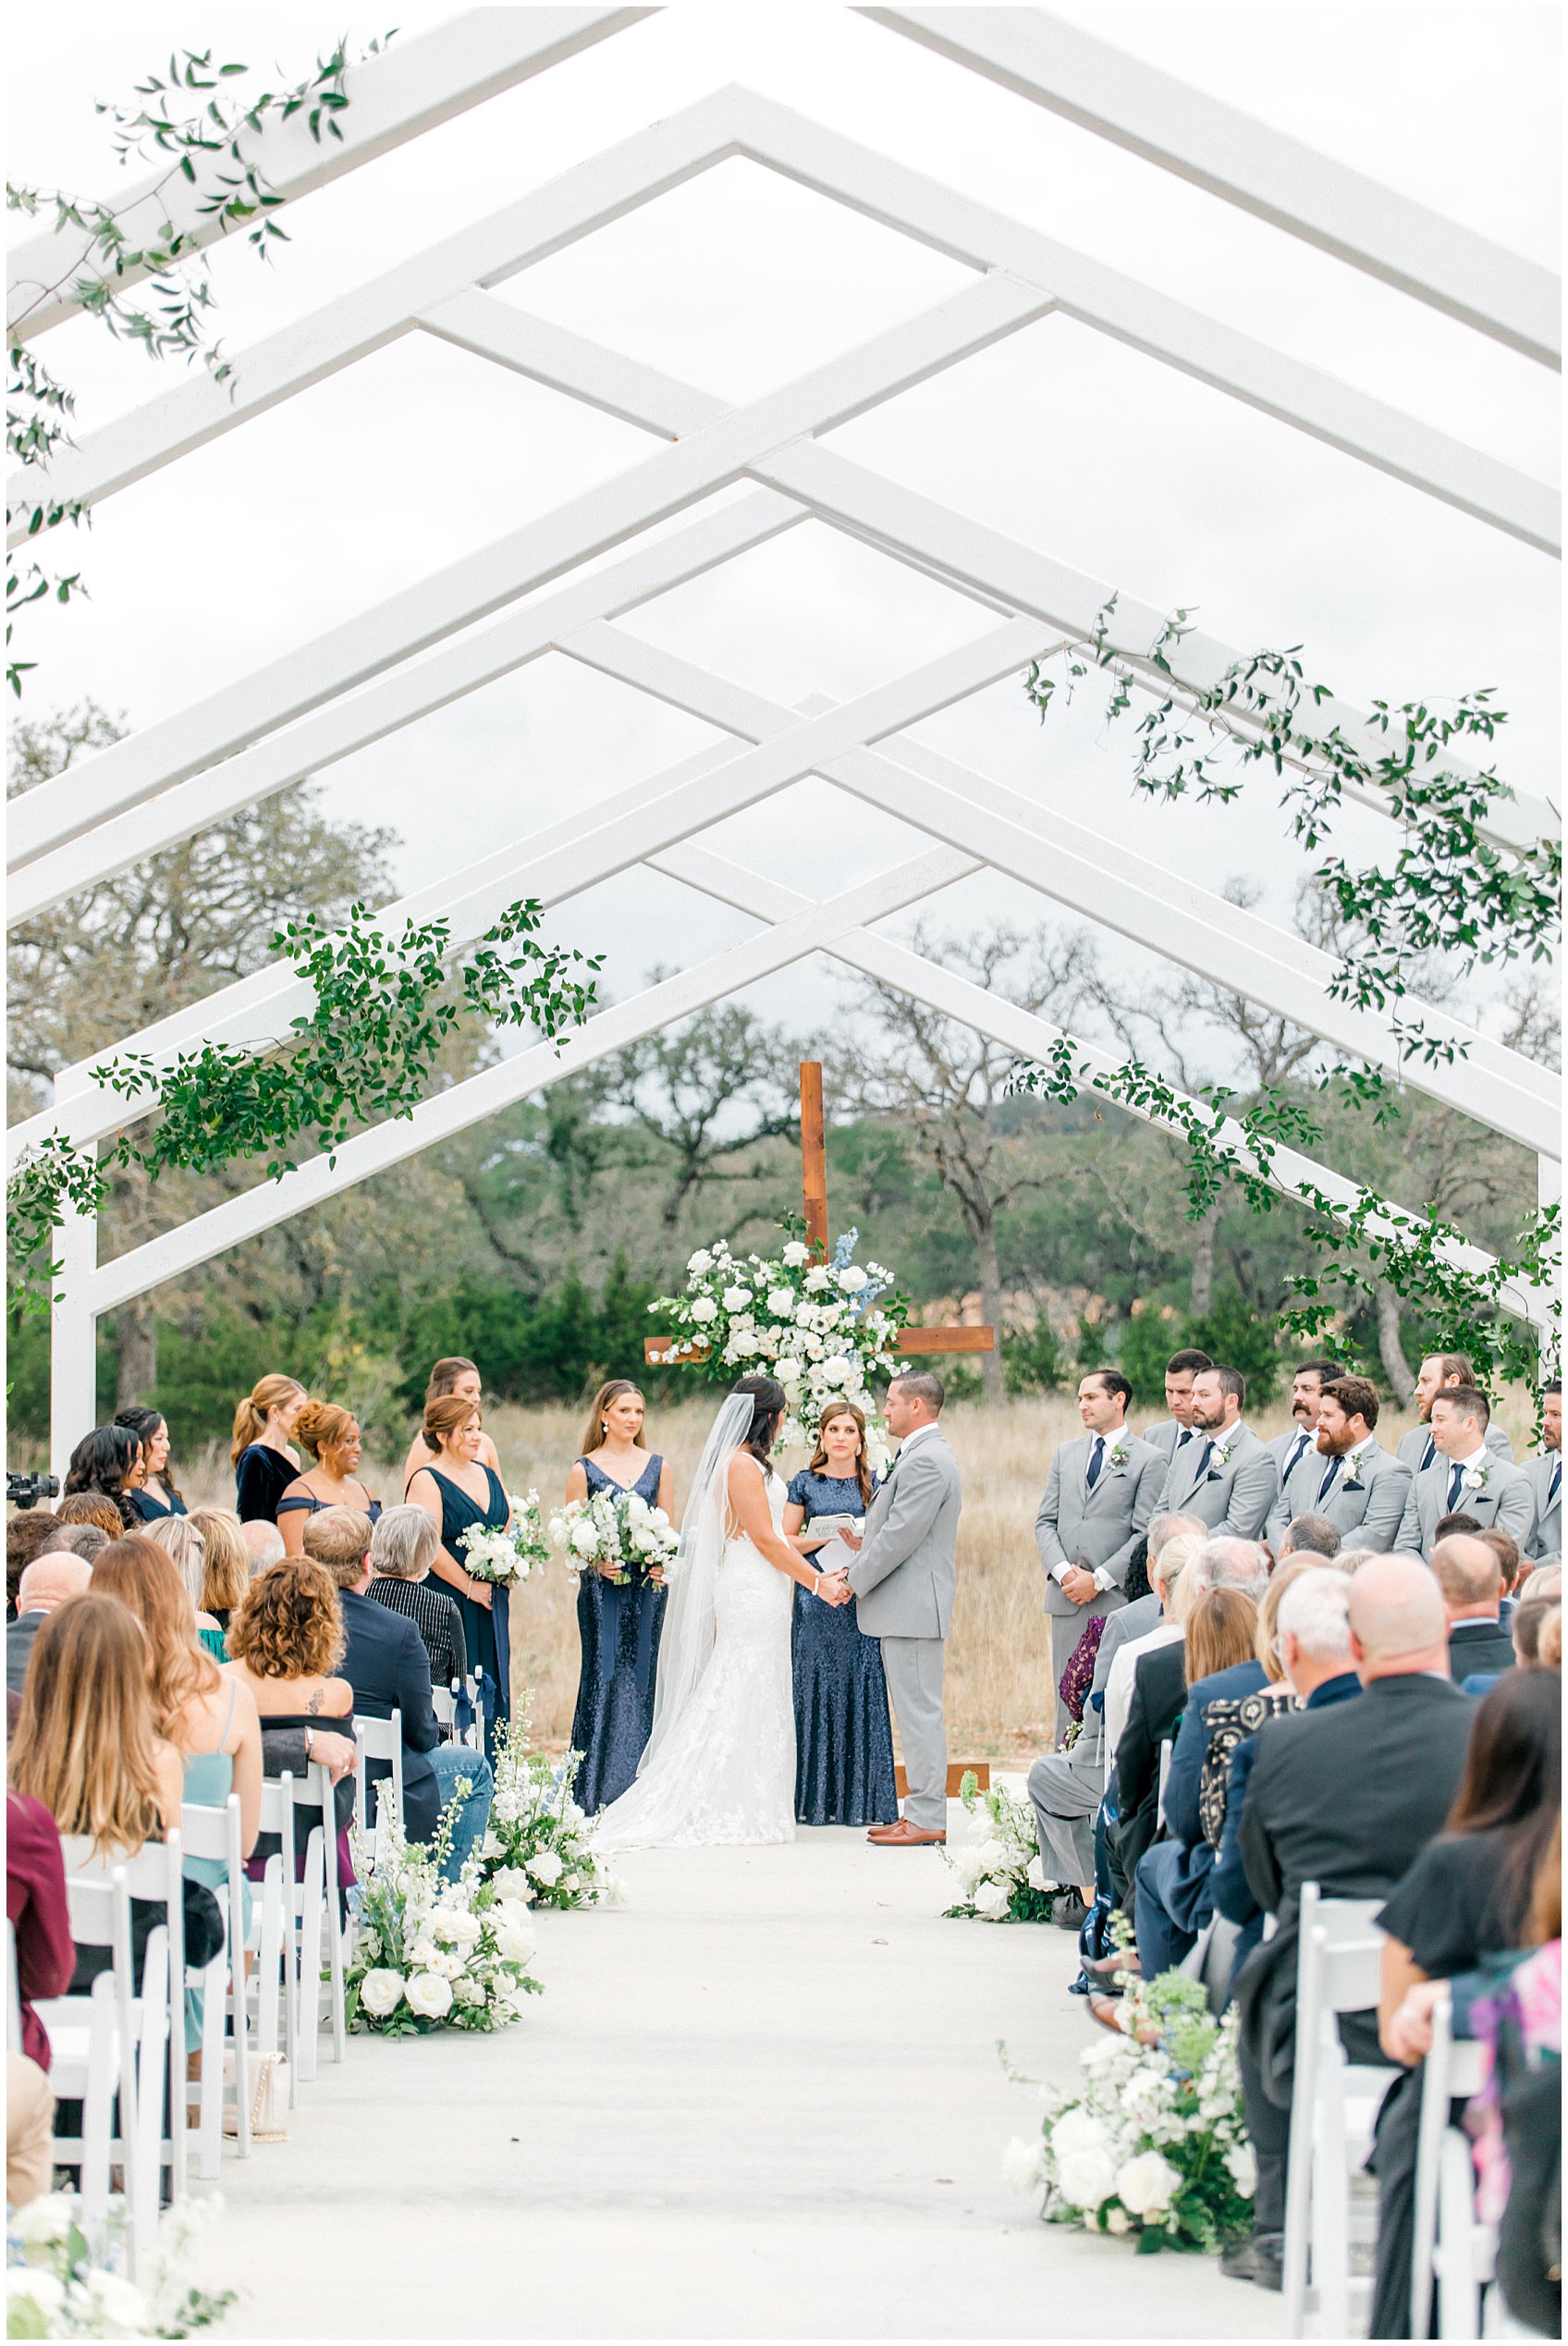 Swallows Eve wedding in Fredericksburg Texas by Allison Jeffers Photography 0034